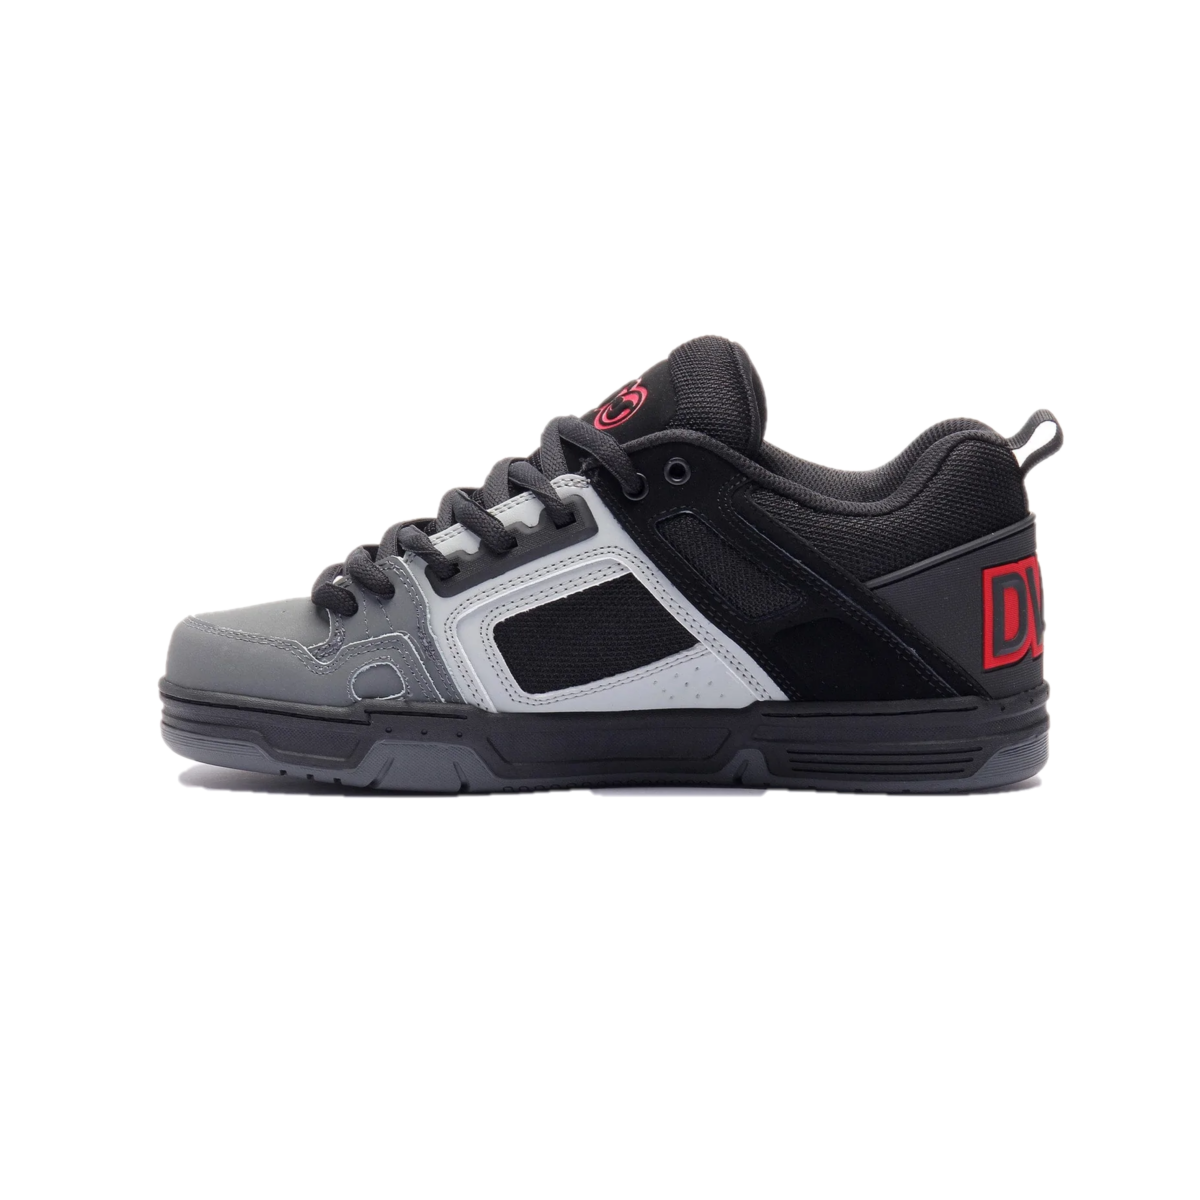 DVS F0000029701 COMANCHE MN'S (Medium) Black/Gray/Red Leather & Nubuck Skate Shoes